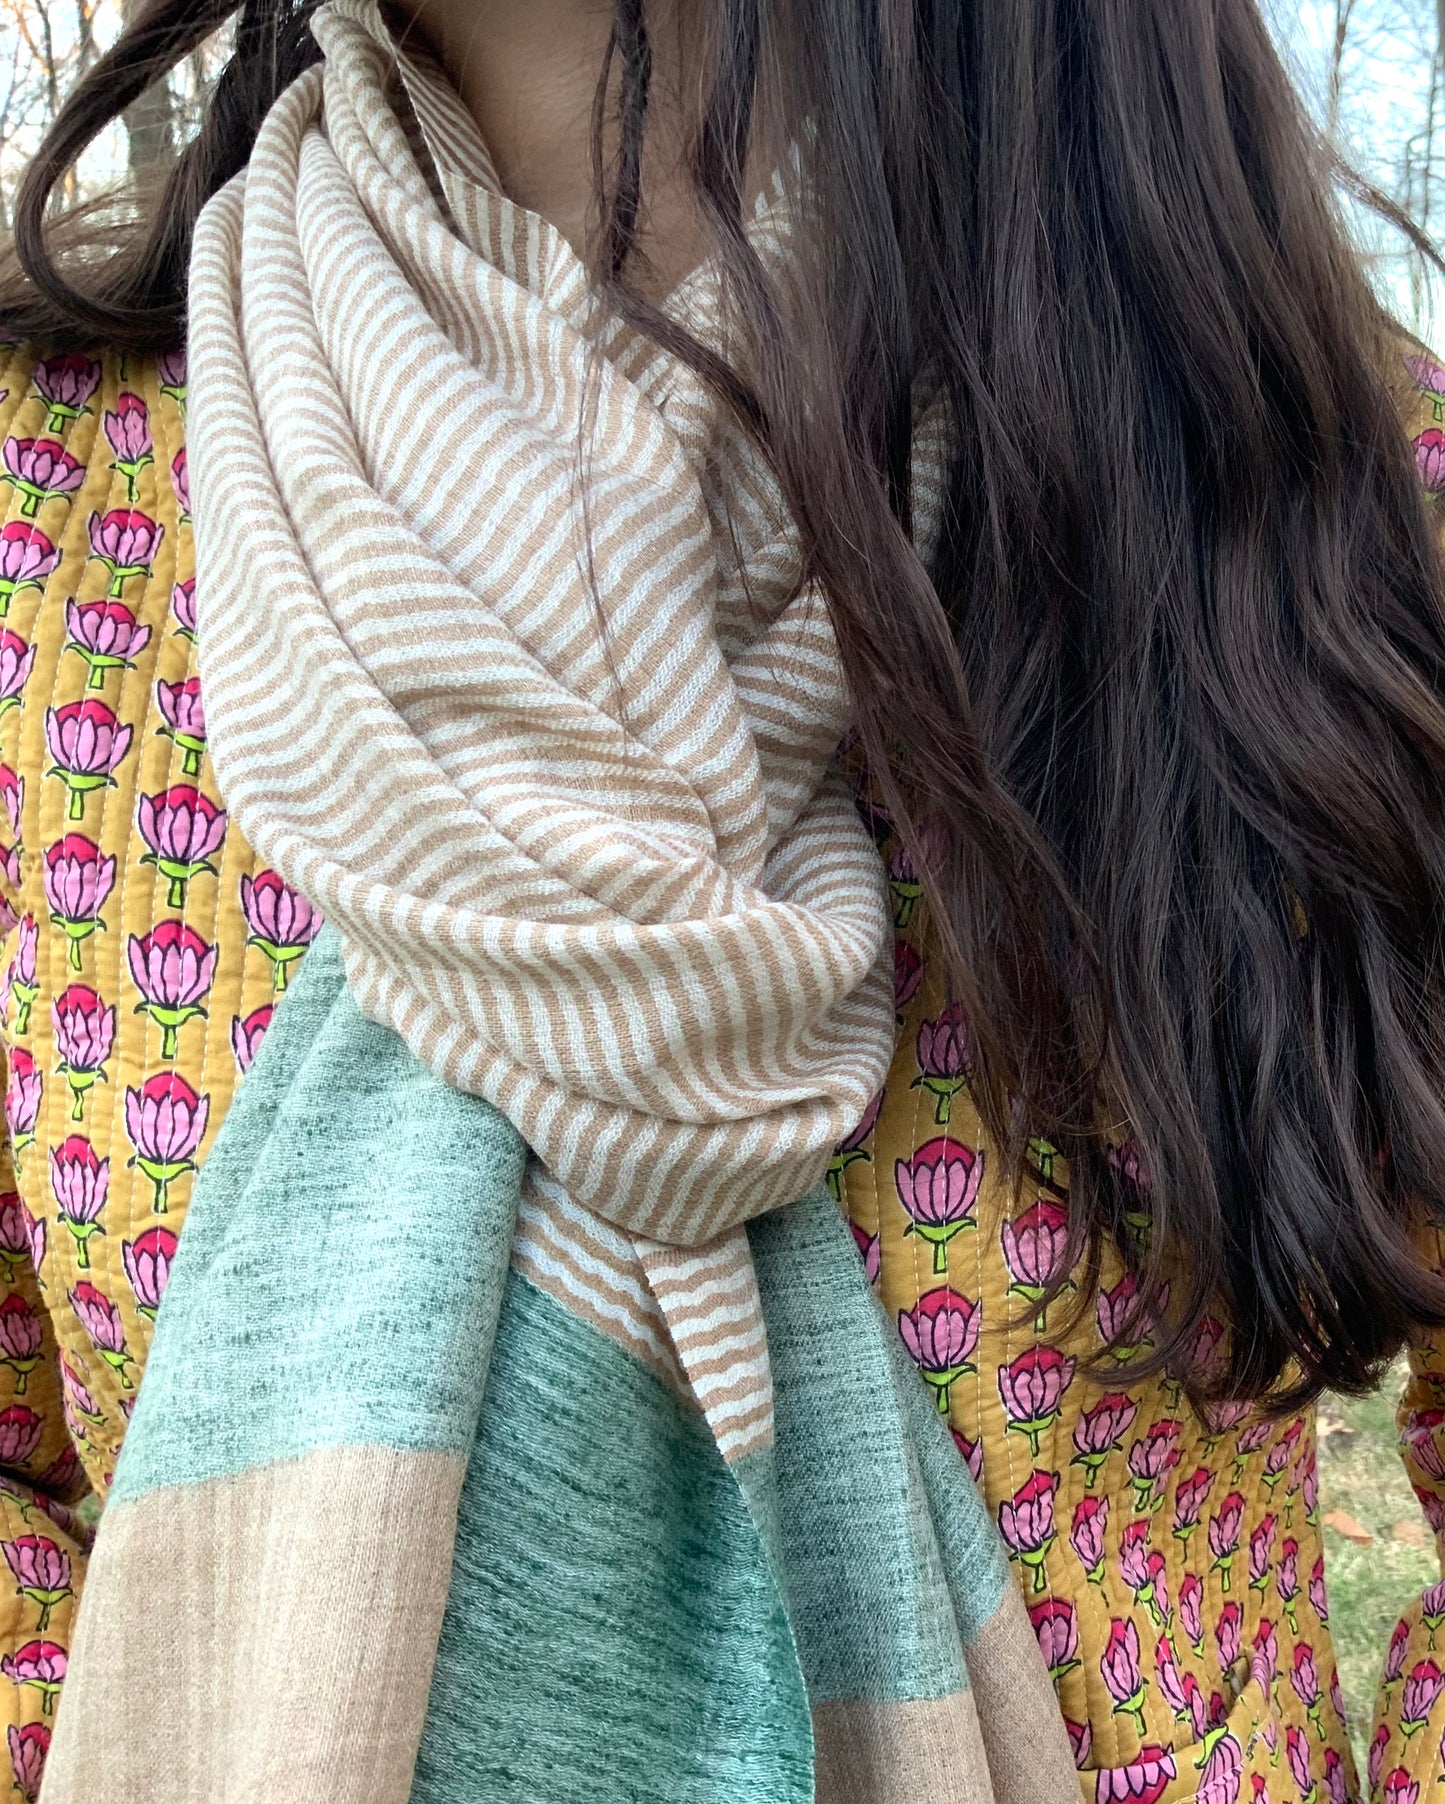 Kashmir shawl with Brown and Beige stripes and a Turquoise border #kashmirShawl #StrippedShawl #ShawlLove - DharBazaar